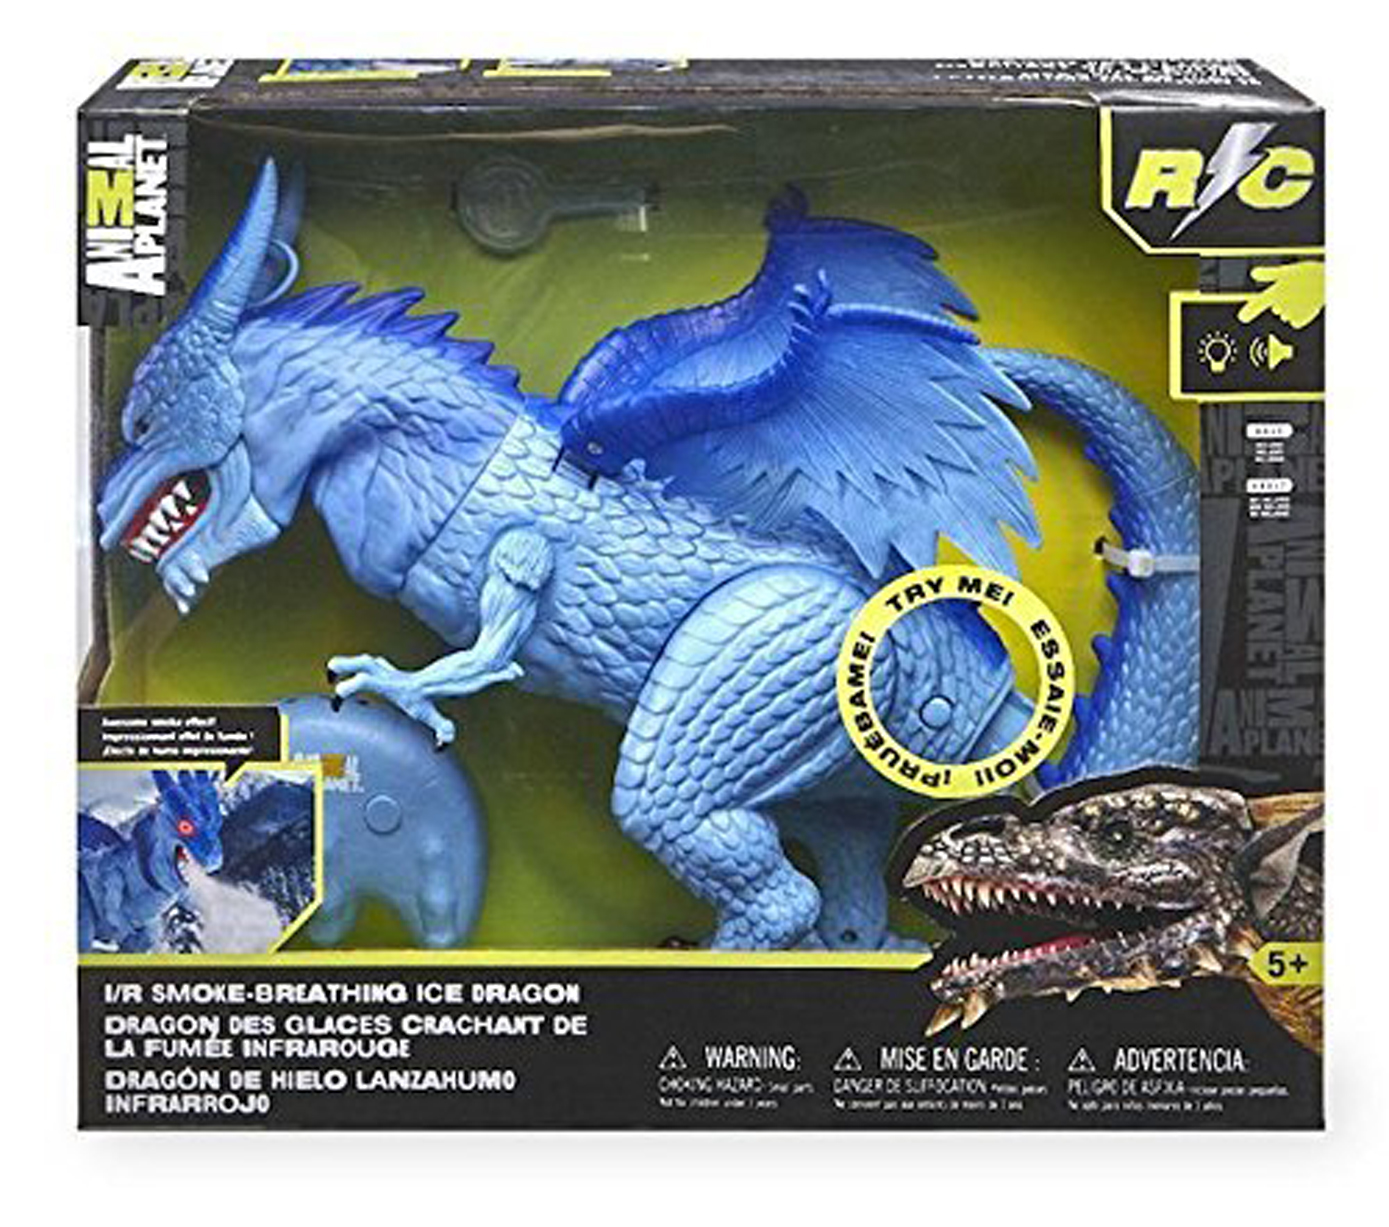 Infarred Smoke Breathing Ice Dragon R/C - Animal Planet - Ele Toys, LLC